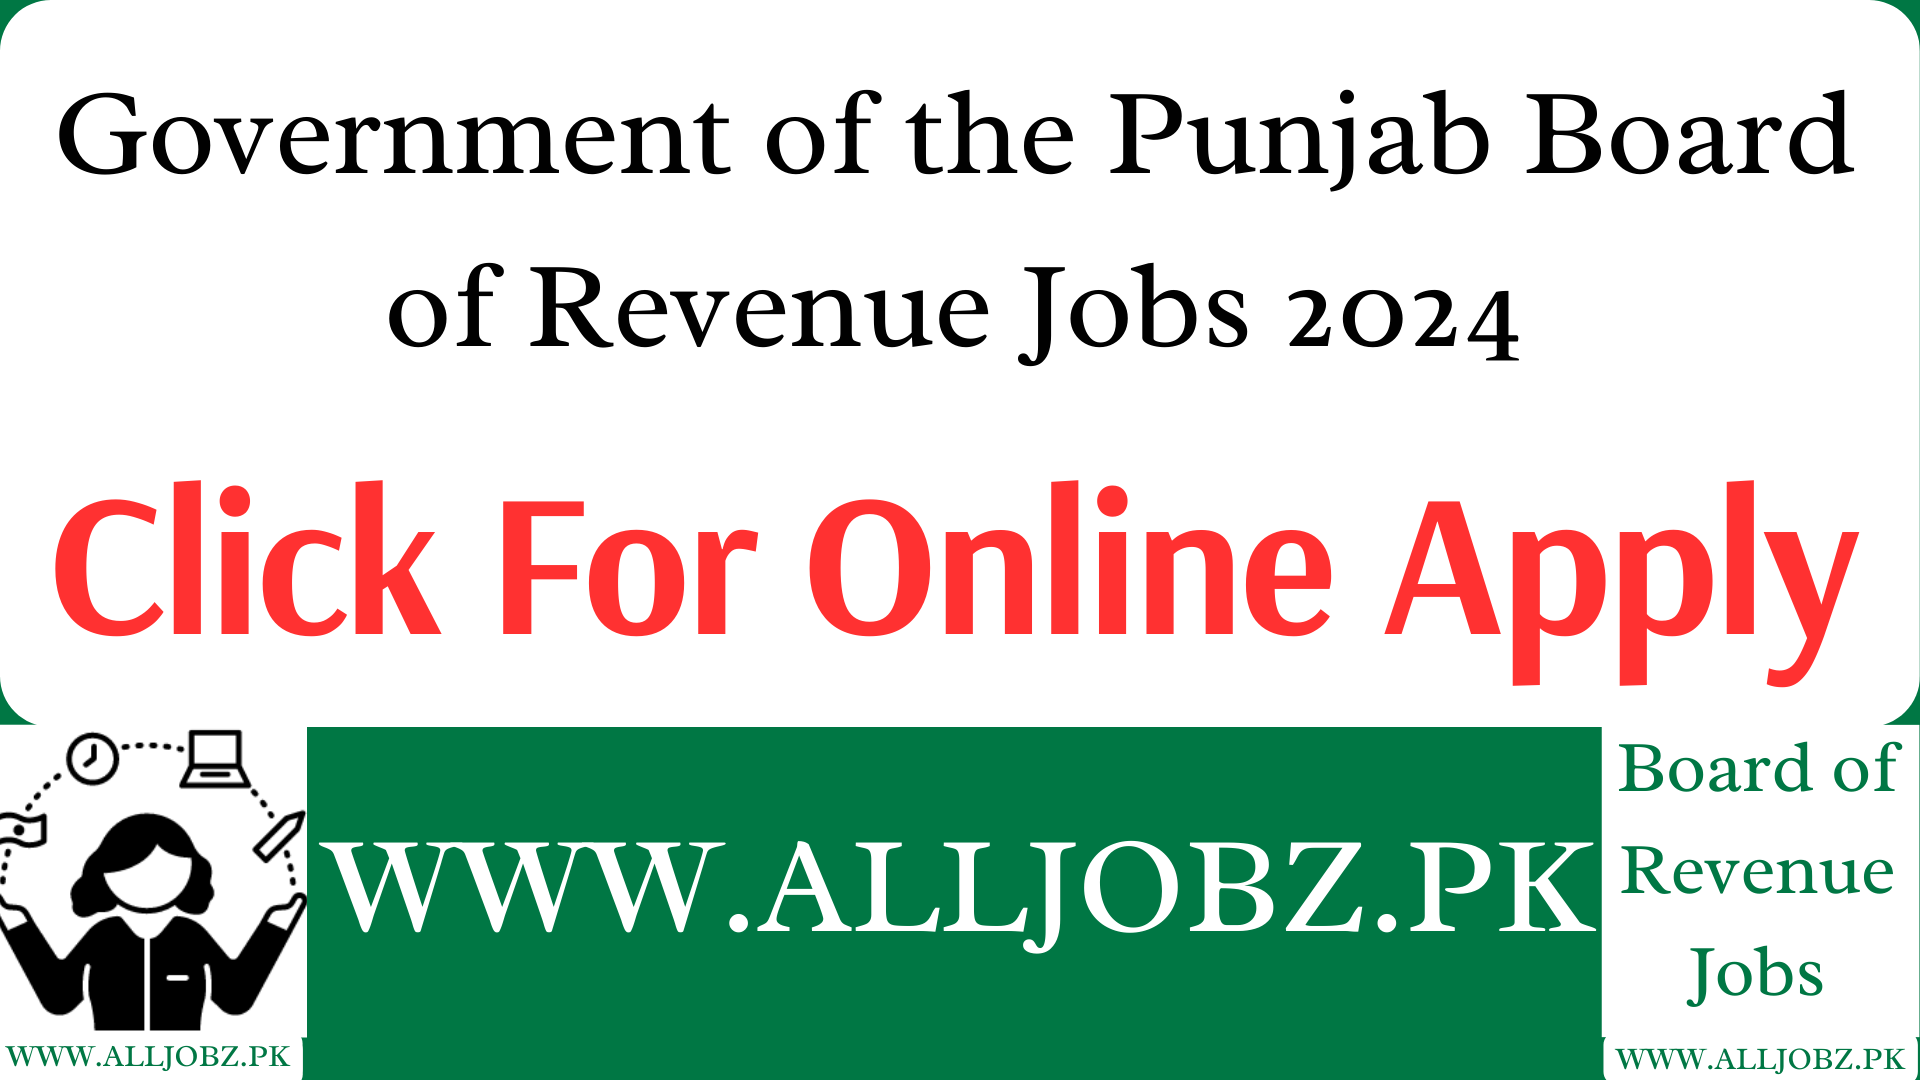 Government Of The Punjab Board Of Revenue Jobs 2024, Board Of Revenue Punjab Jobs 2024 Last Date, Board Of Revenue Punjab Jobs 2024 Apply Online, Www.jobs.punjab.gov.pk Online Apply, Www.gov.pk Jobs 2024, Www.jobs.punjab.gov.pk Matric Base, Board Of Revenue Punjab Jobs 2024 Result, Board Of Revenue Jobs, Pitb Jobs, At Jobs.pk, Alljobz.pk Pakistan, Jobs.pk, Newz.com.pk, Njp.gov.pk, Paperpk.com And News.com.pk